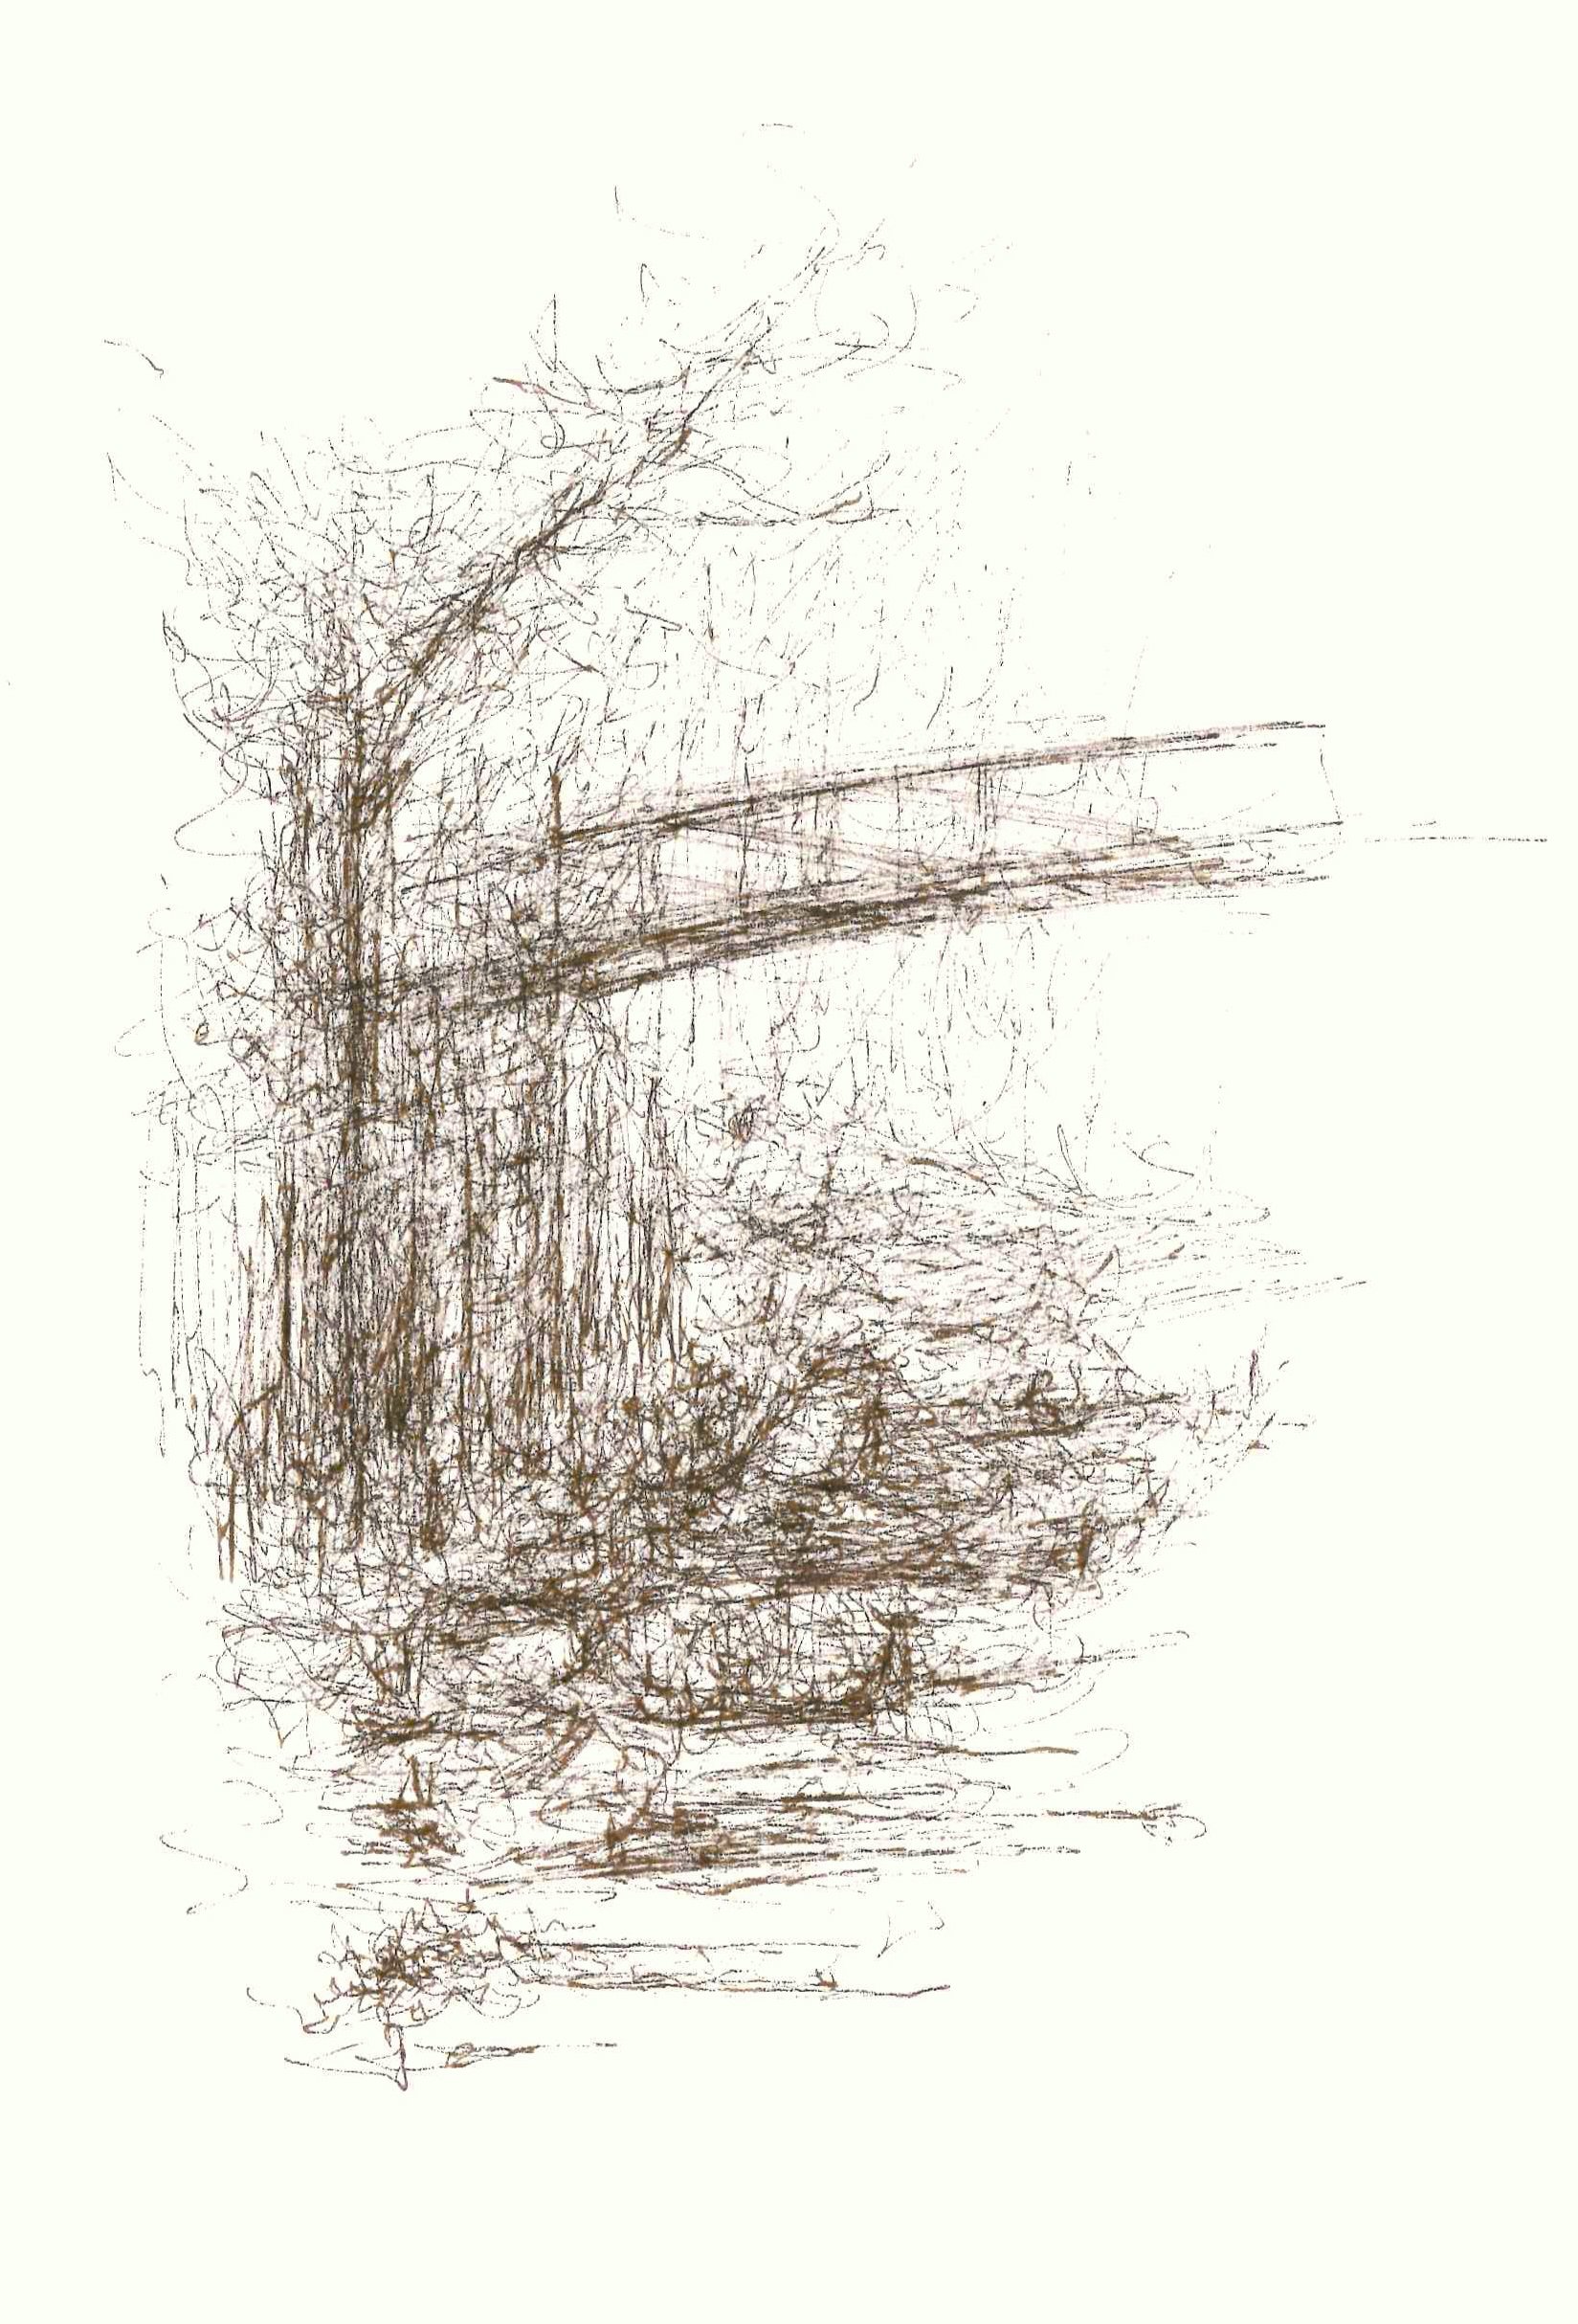  Untitled, Crystal Bridges, Bentonville, Arkansas, 2023  Micron Pen on Paper, 8.5 x 5.5 inches 